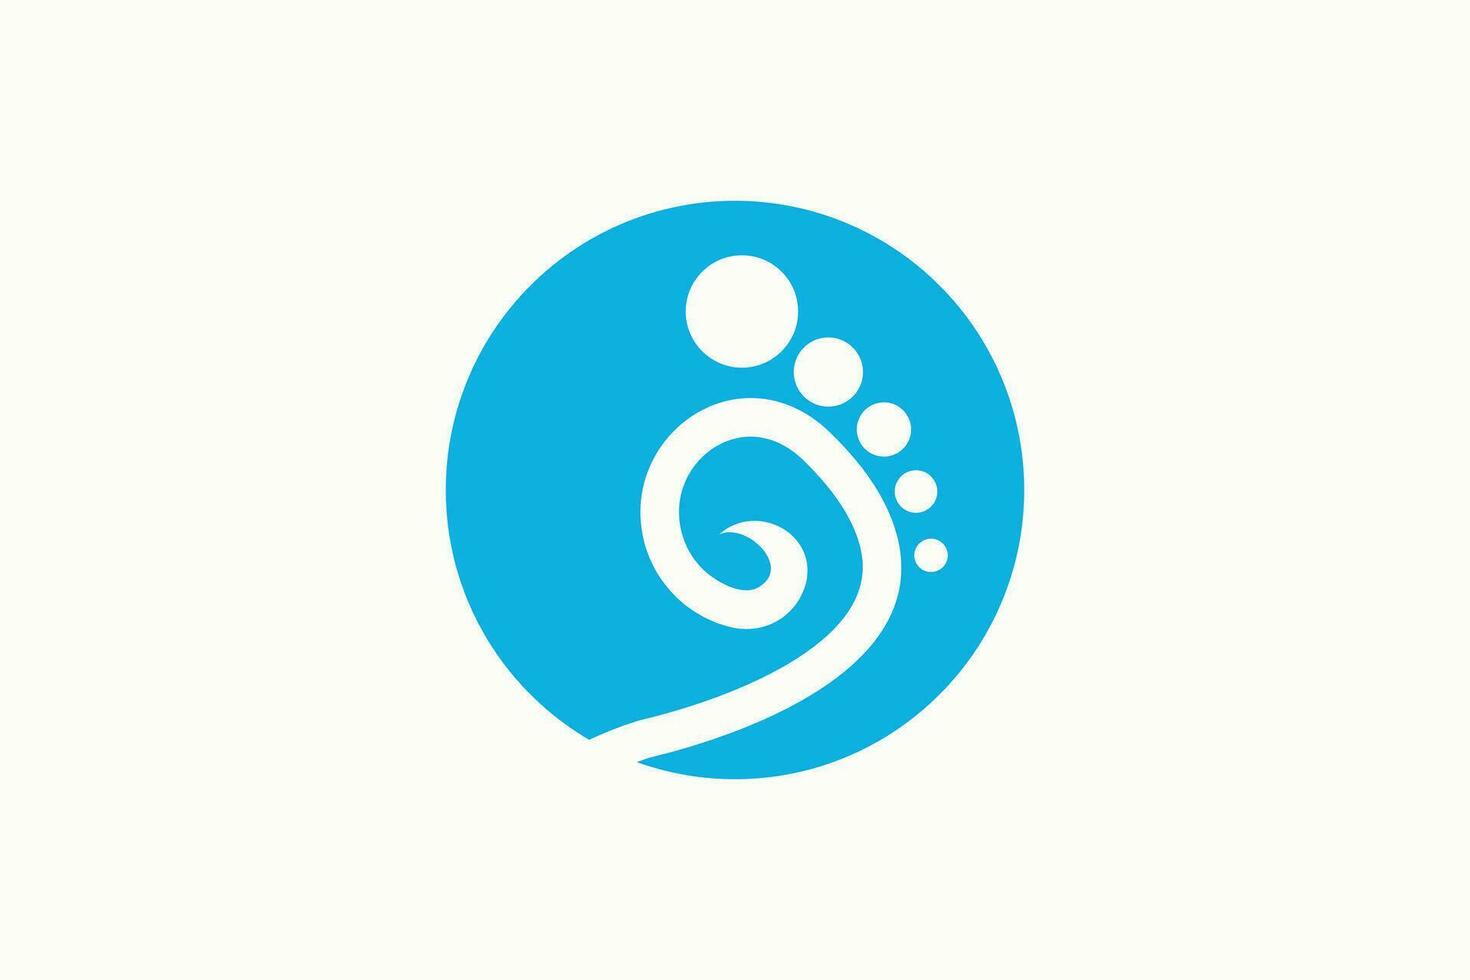 Foot  logo design health illustration woman pedicure salon and clinic premium vector